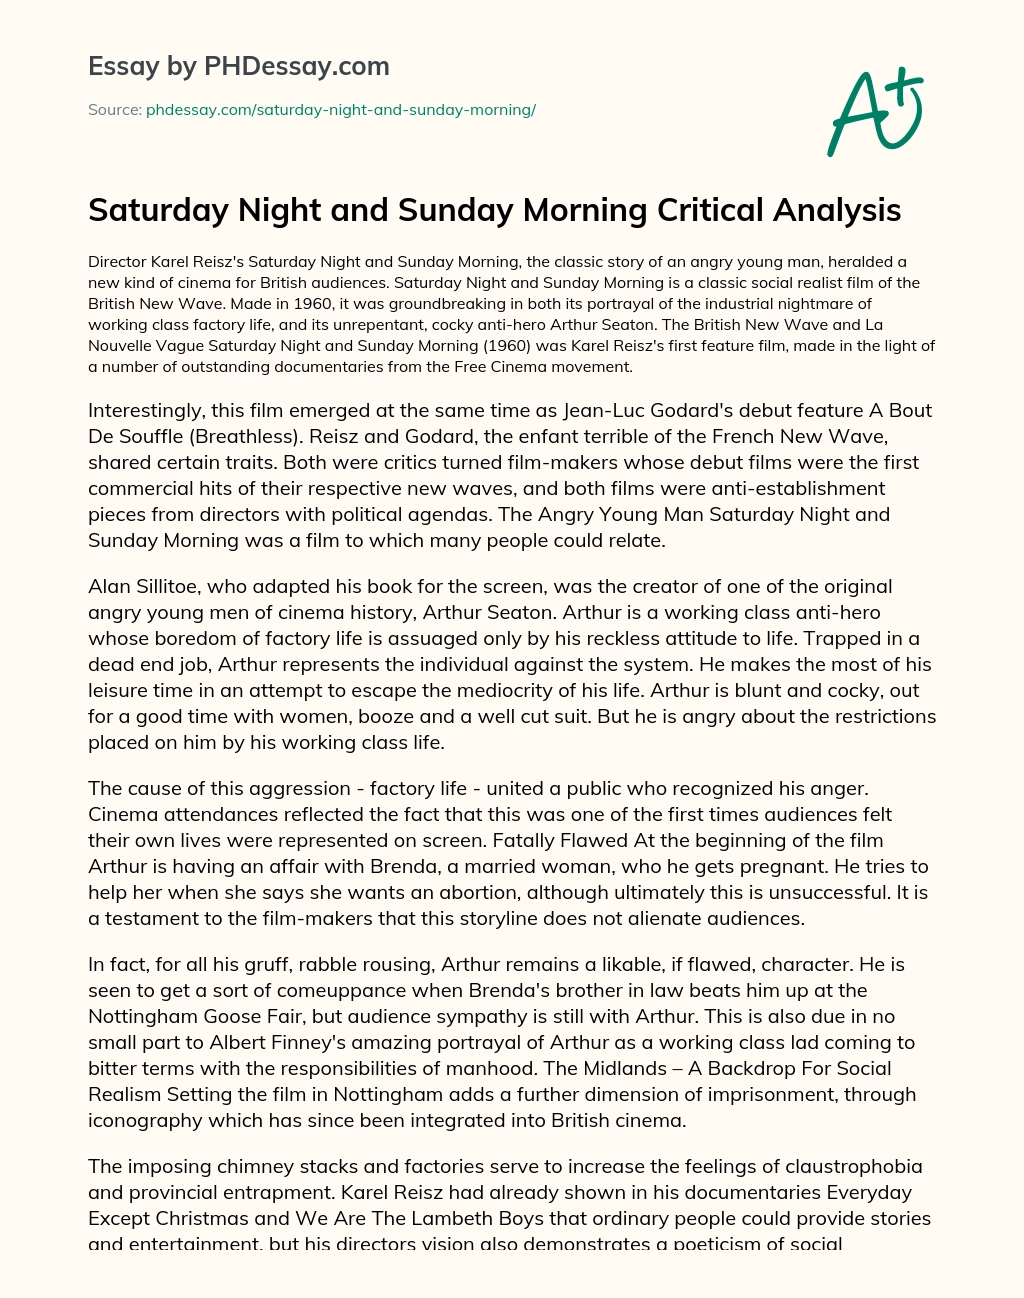 Saturday Night and Sunday Morning Critical Analysis essay